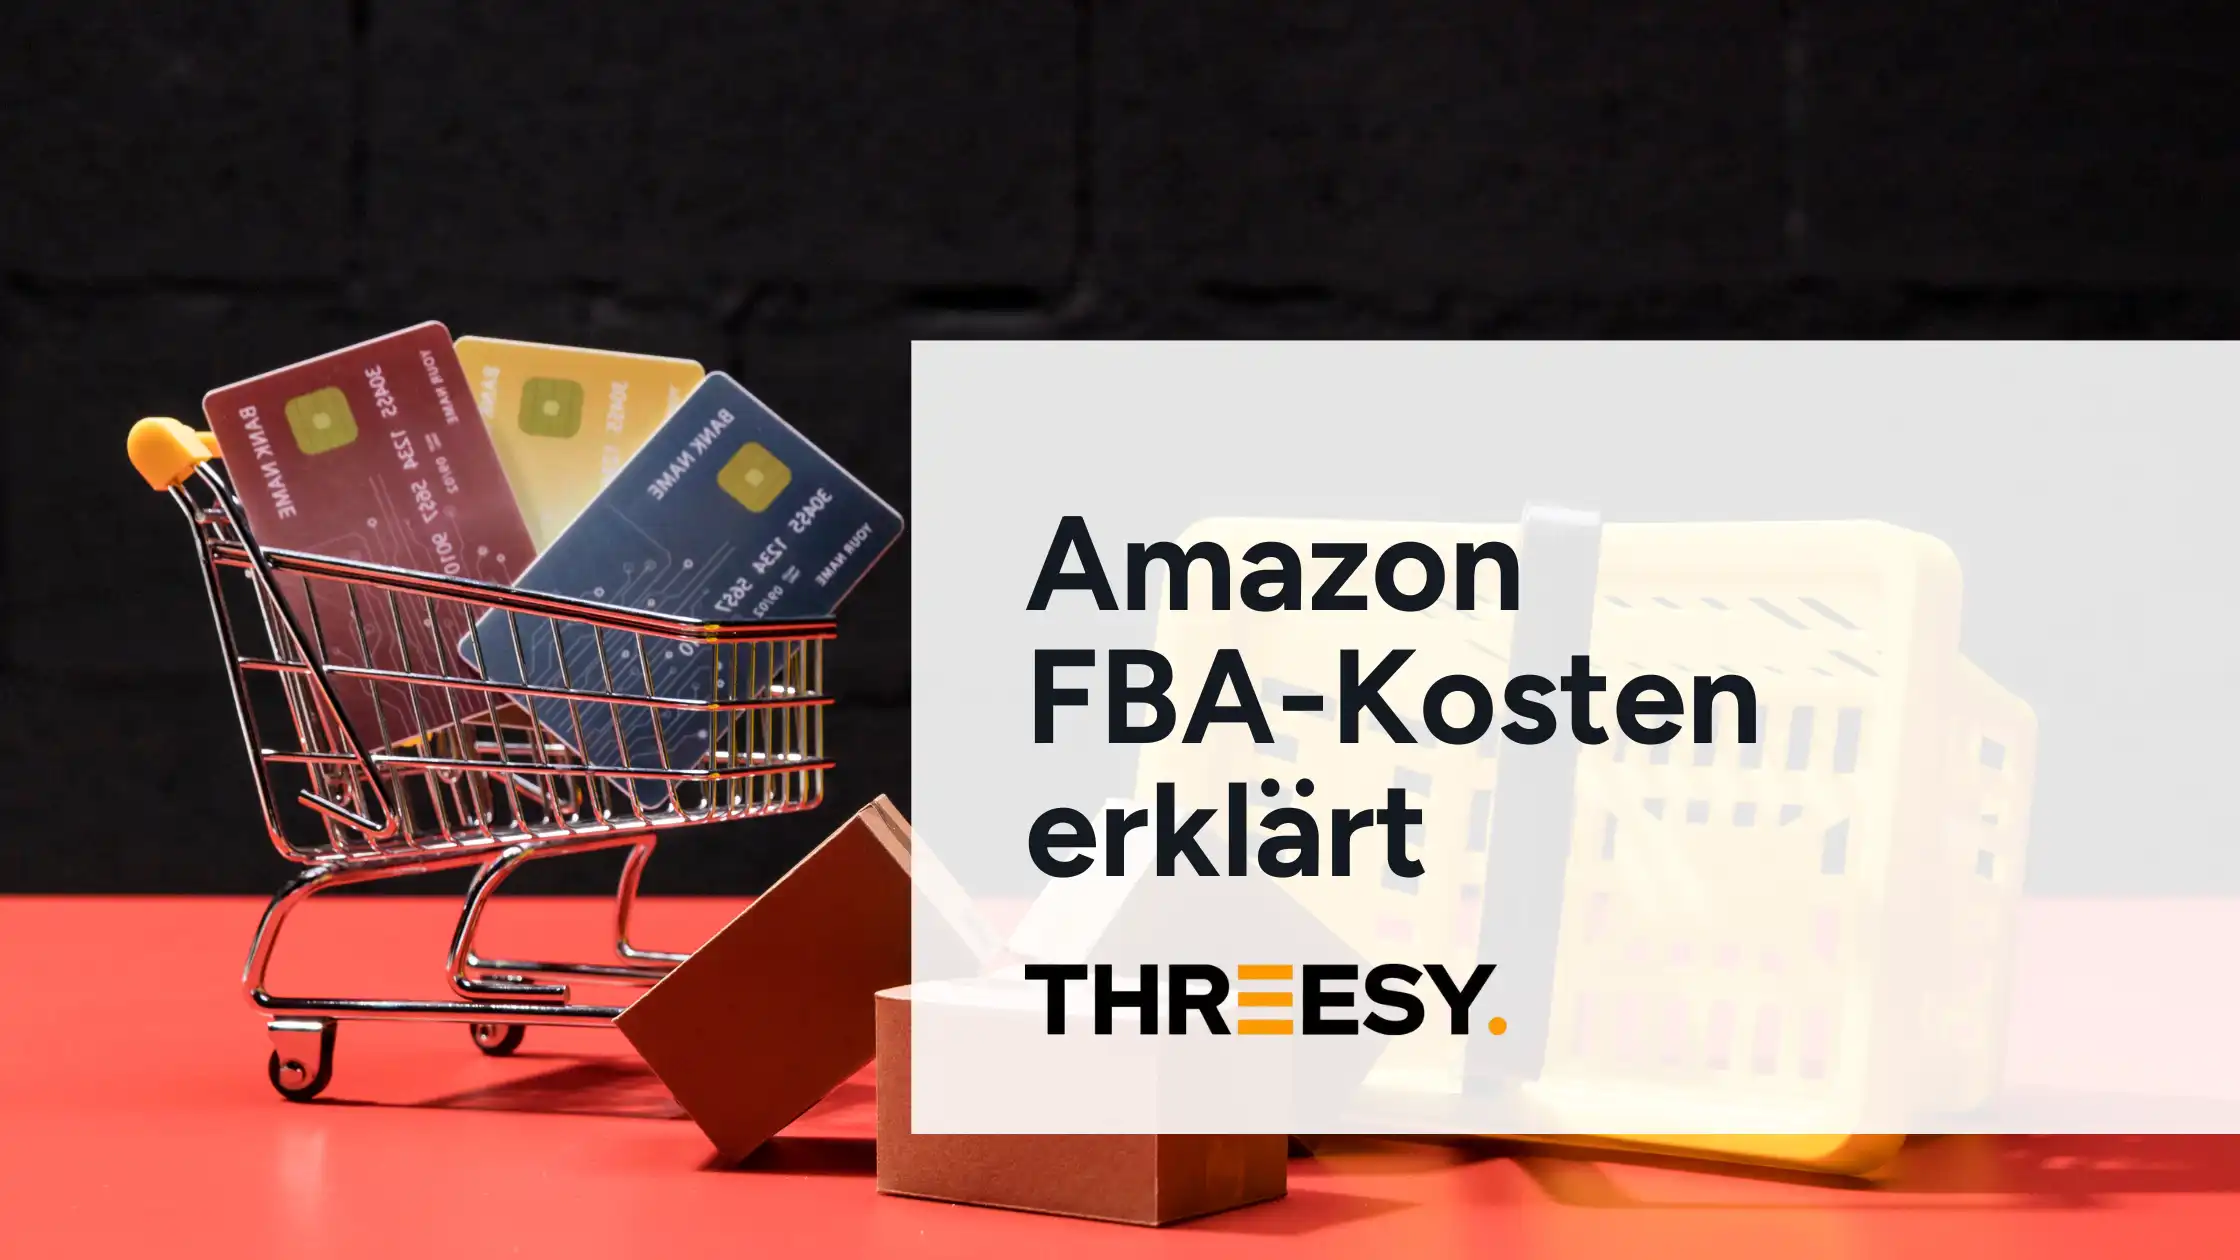 Amazon FBA kosten erklärt